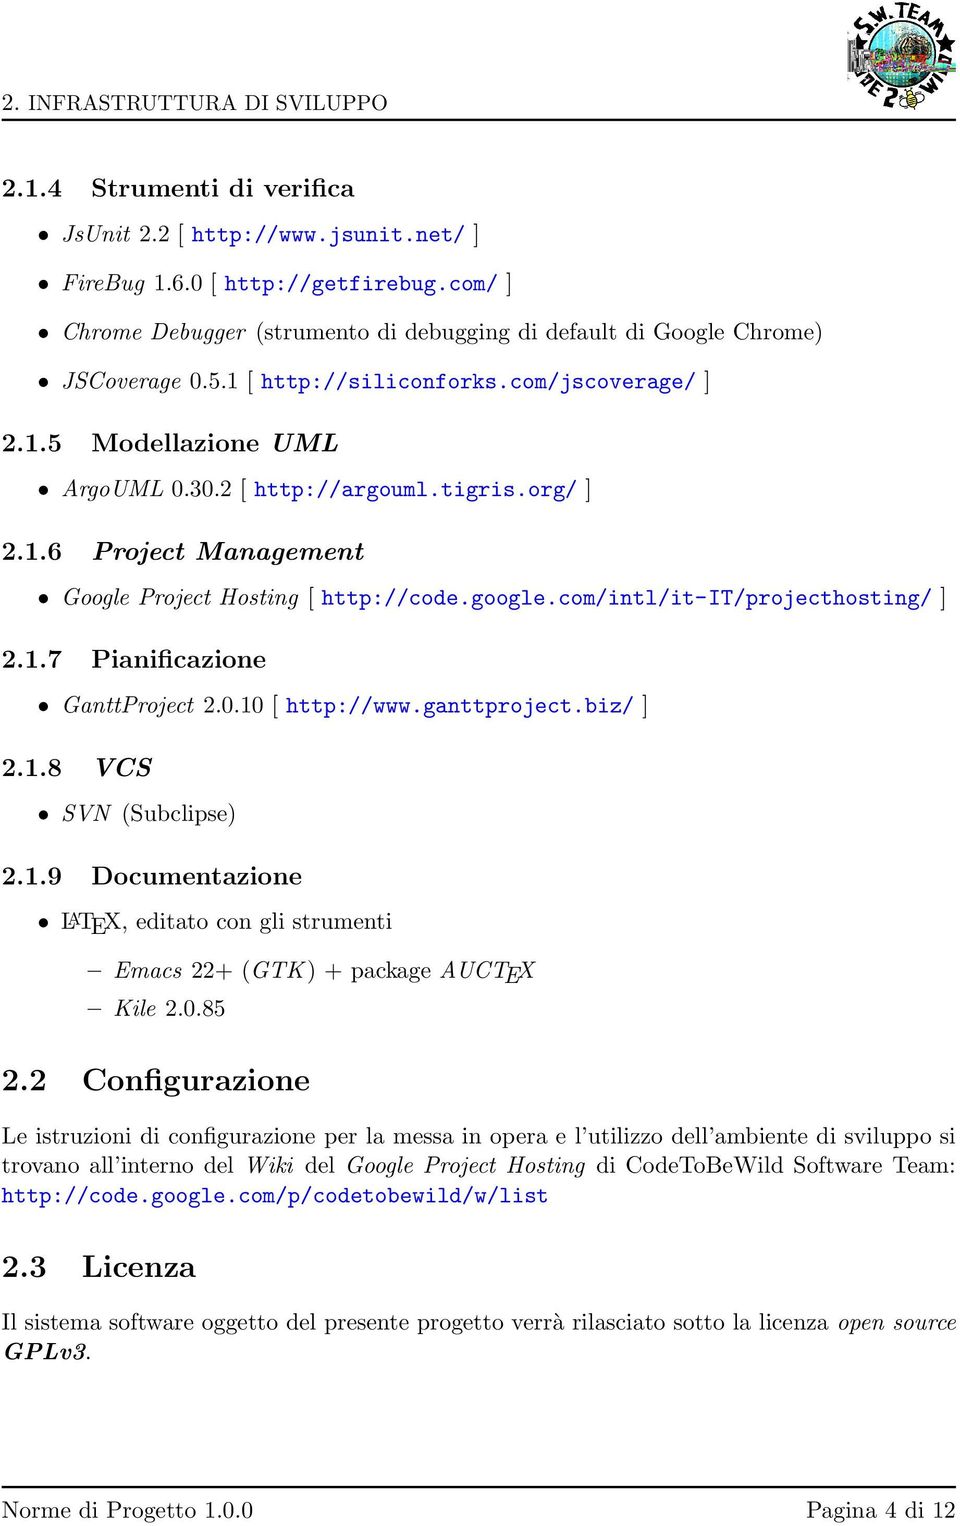 org/ ] 2.1.6 Project Management Google Project Hosting [ http://code.google.com/intl/it-it/projecthosting/ ] 2.1.7 Pianificazione GanttProject 2.0.10 [ http://www.ganttproject.biz/ ] 2.1.8 VCS SVN (Subclipse) 2.